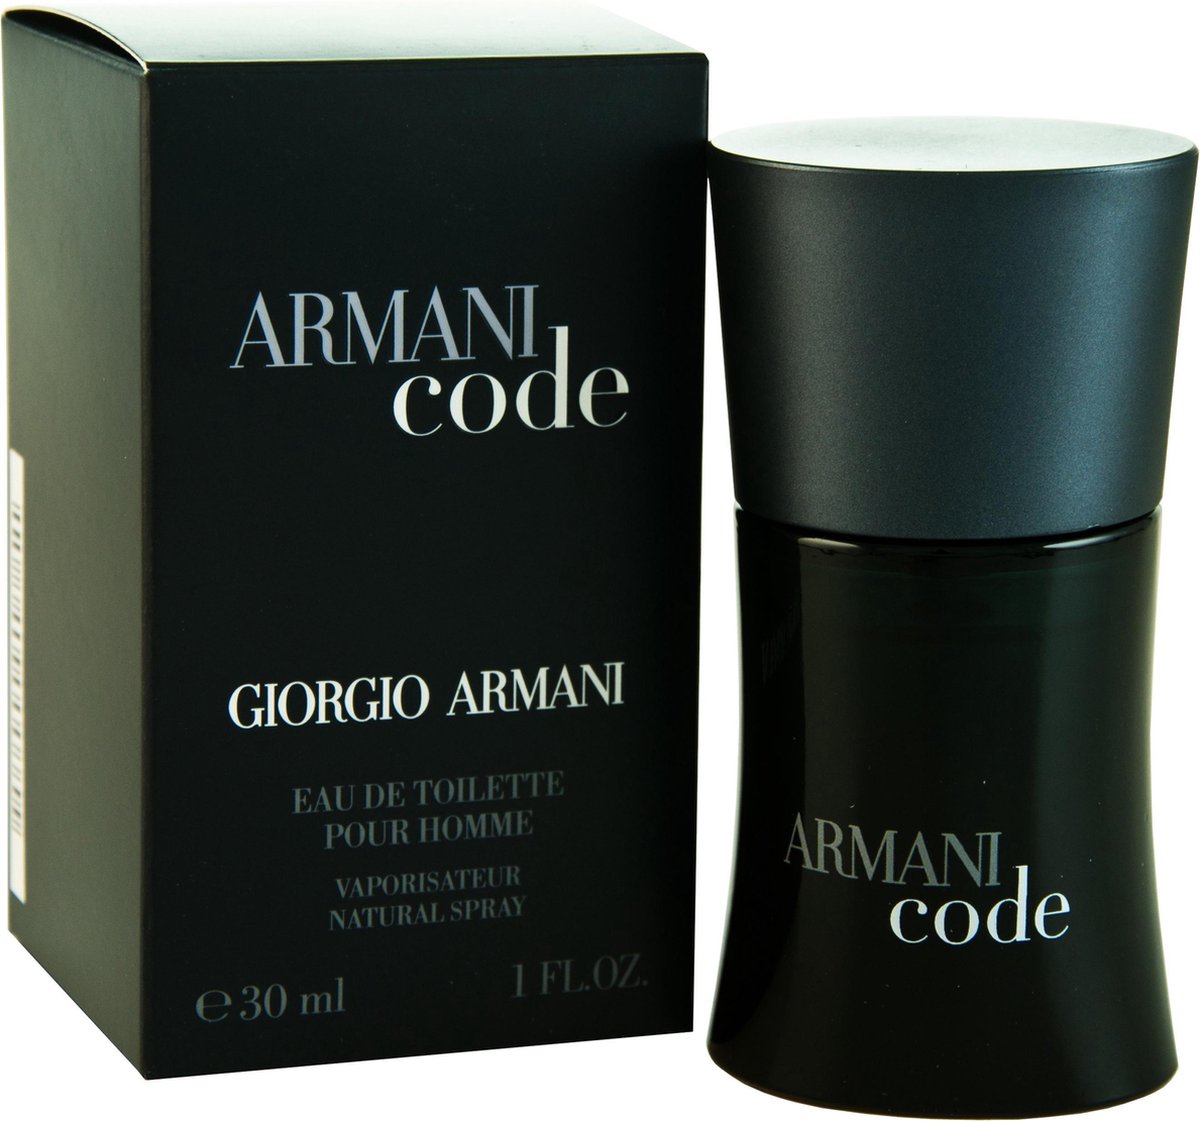 Giorgio Armani туалетная вода Armani code homme. Armani code pour homme EDT 30ml. Armani code 30ml. Giorgio Armani code pour homme. Armani code pour homme